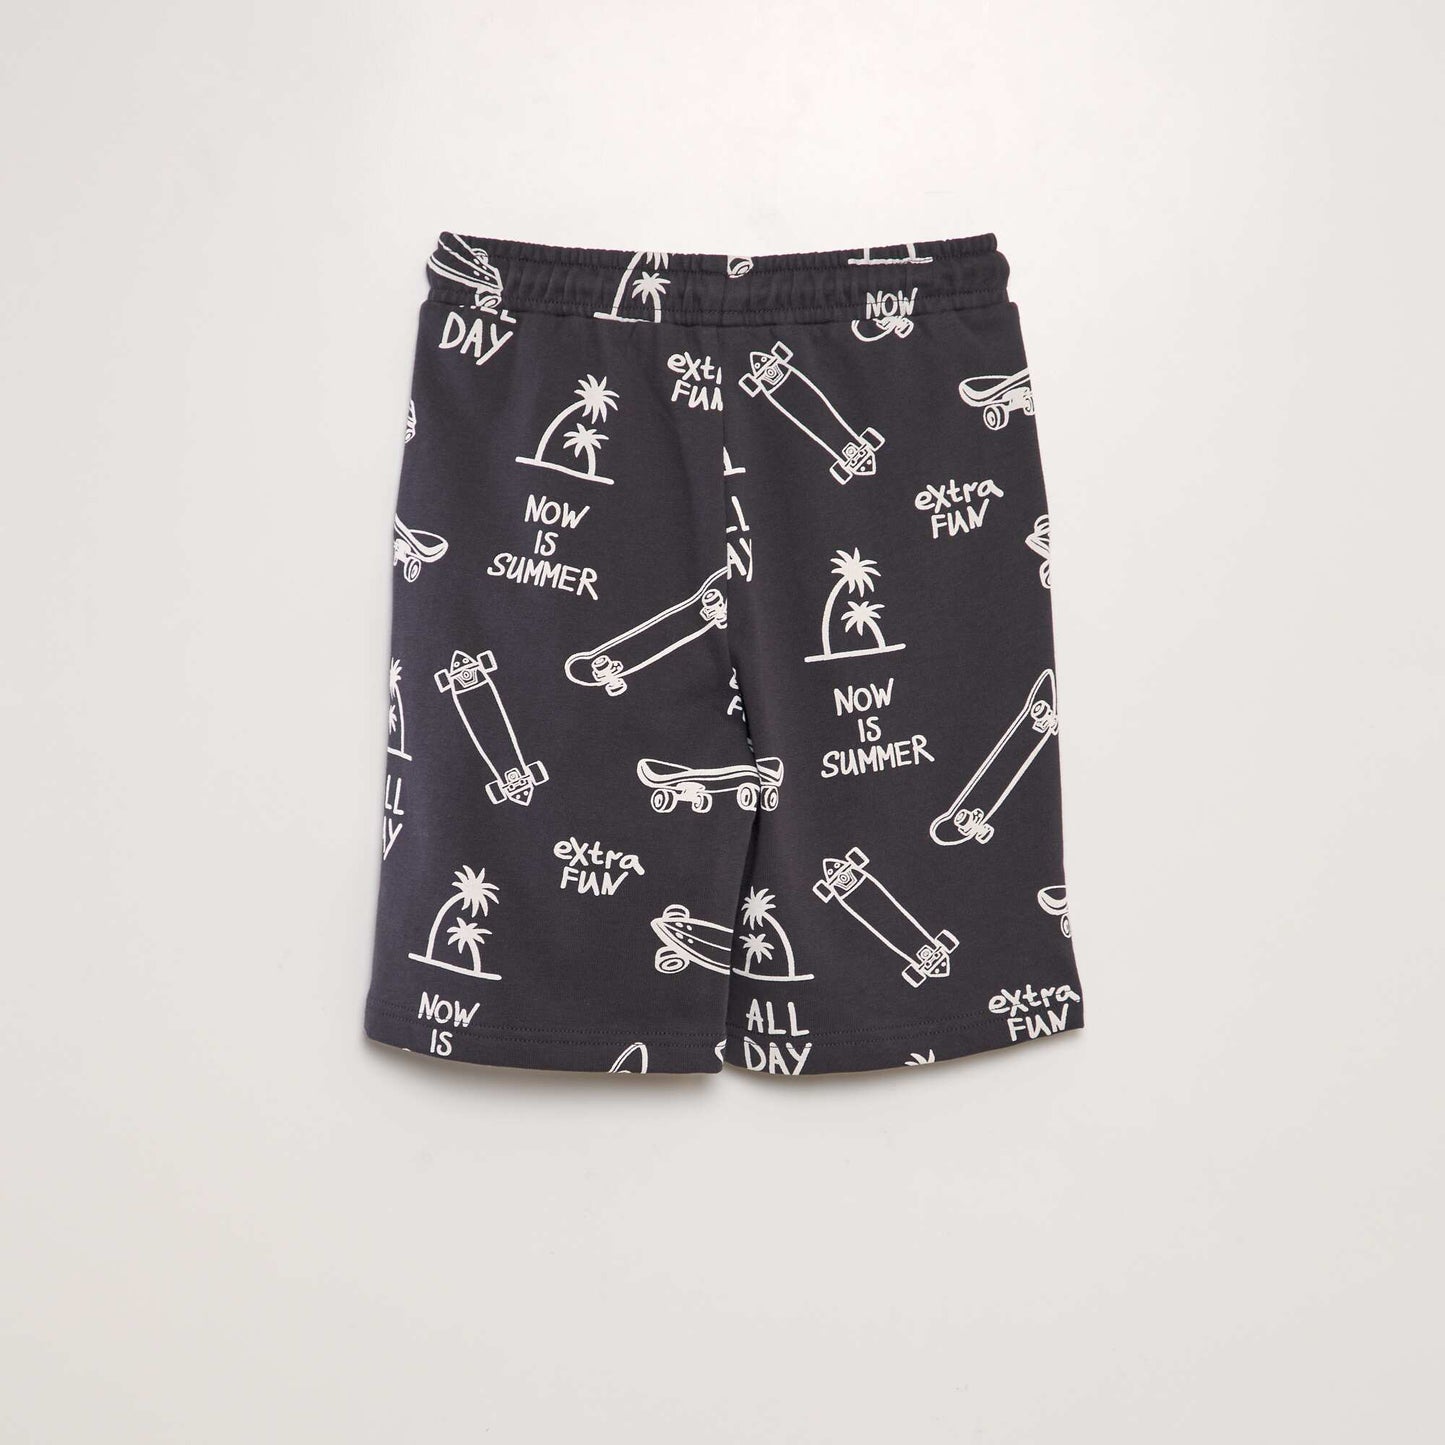 Printed sweatshirt fabric Bermuda shorts BLACK